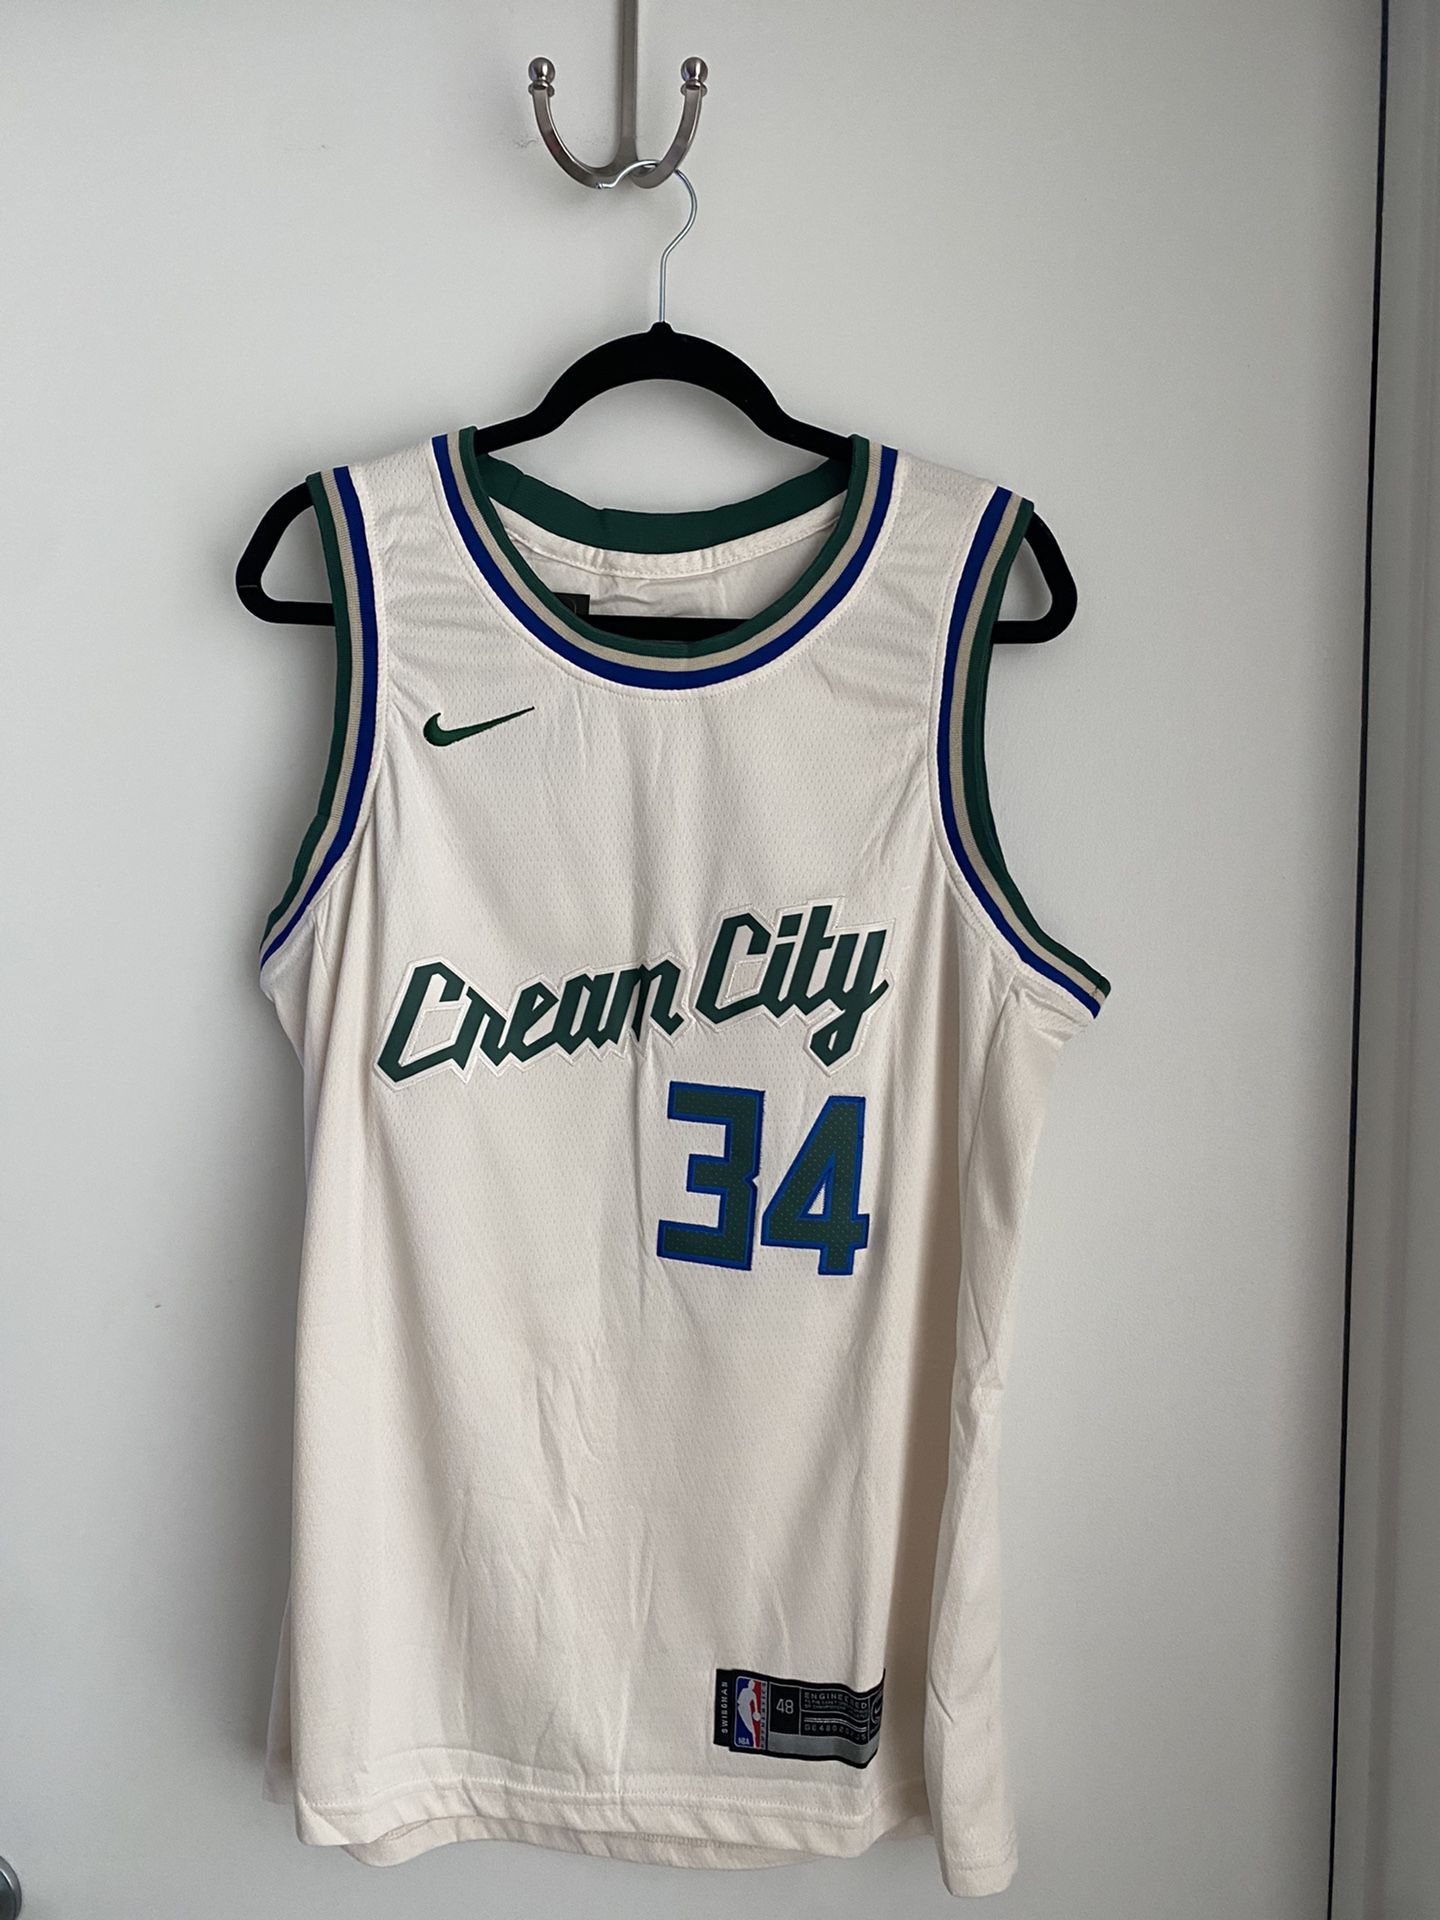 bucks cream city jersey for sale